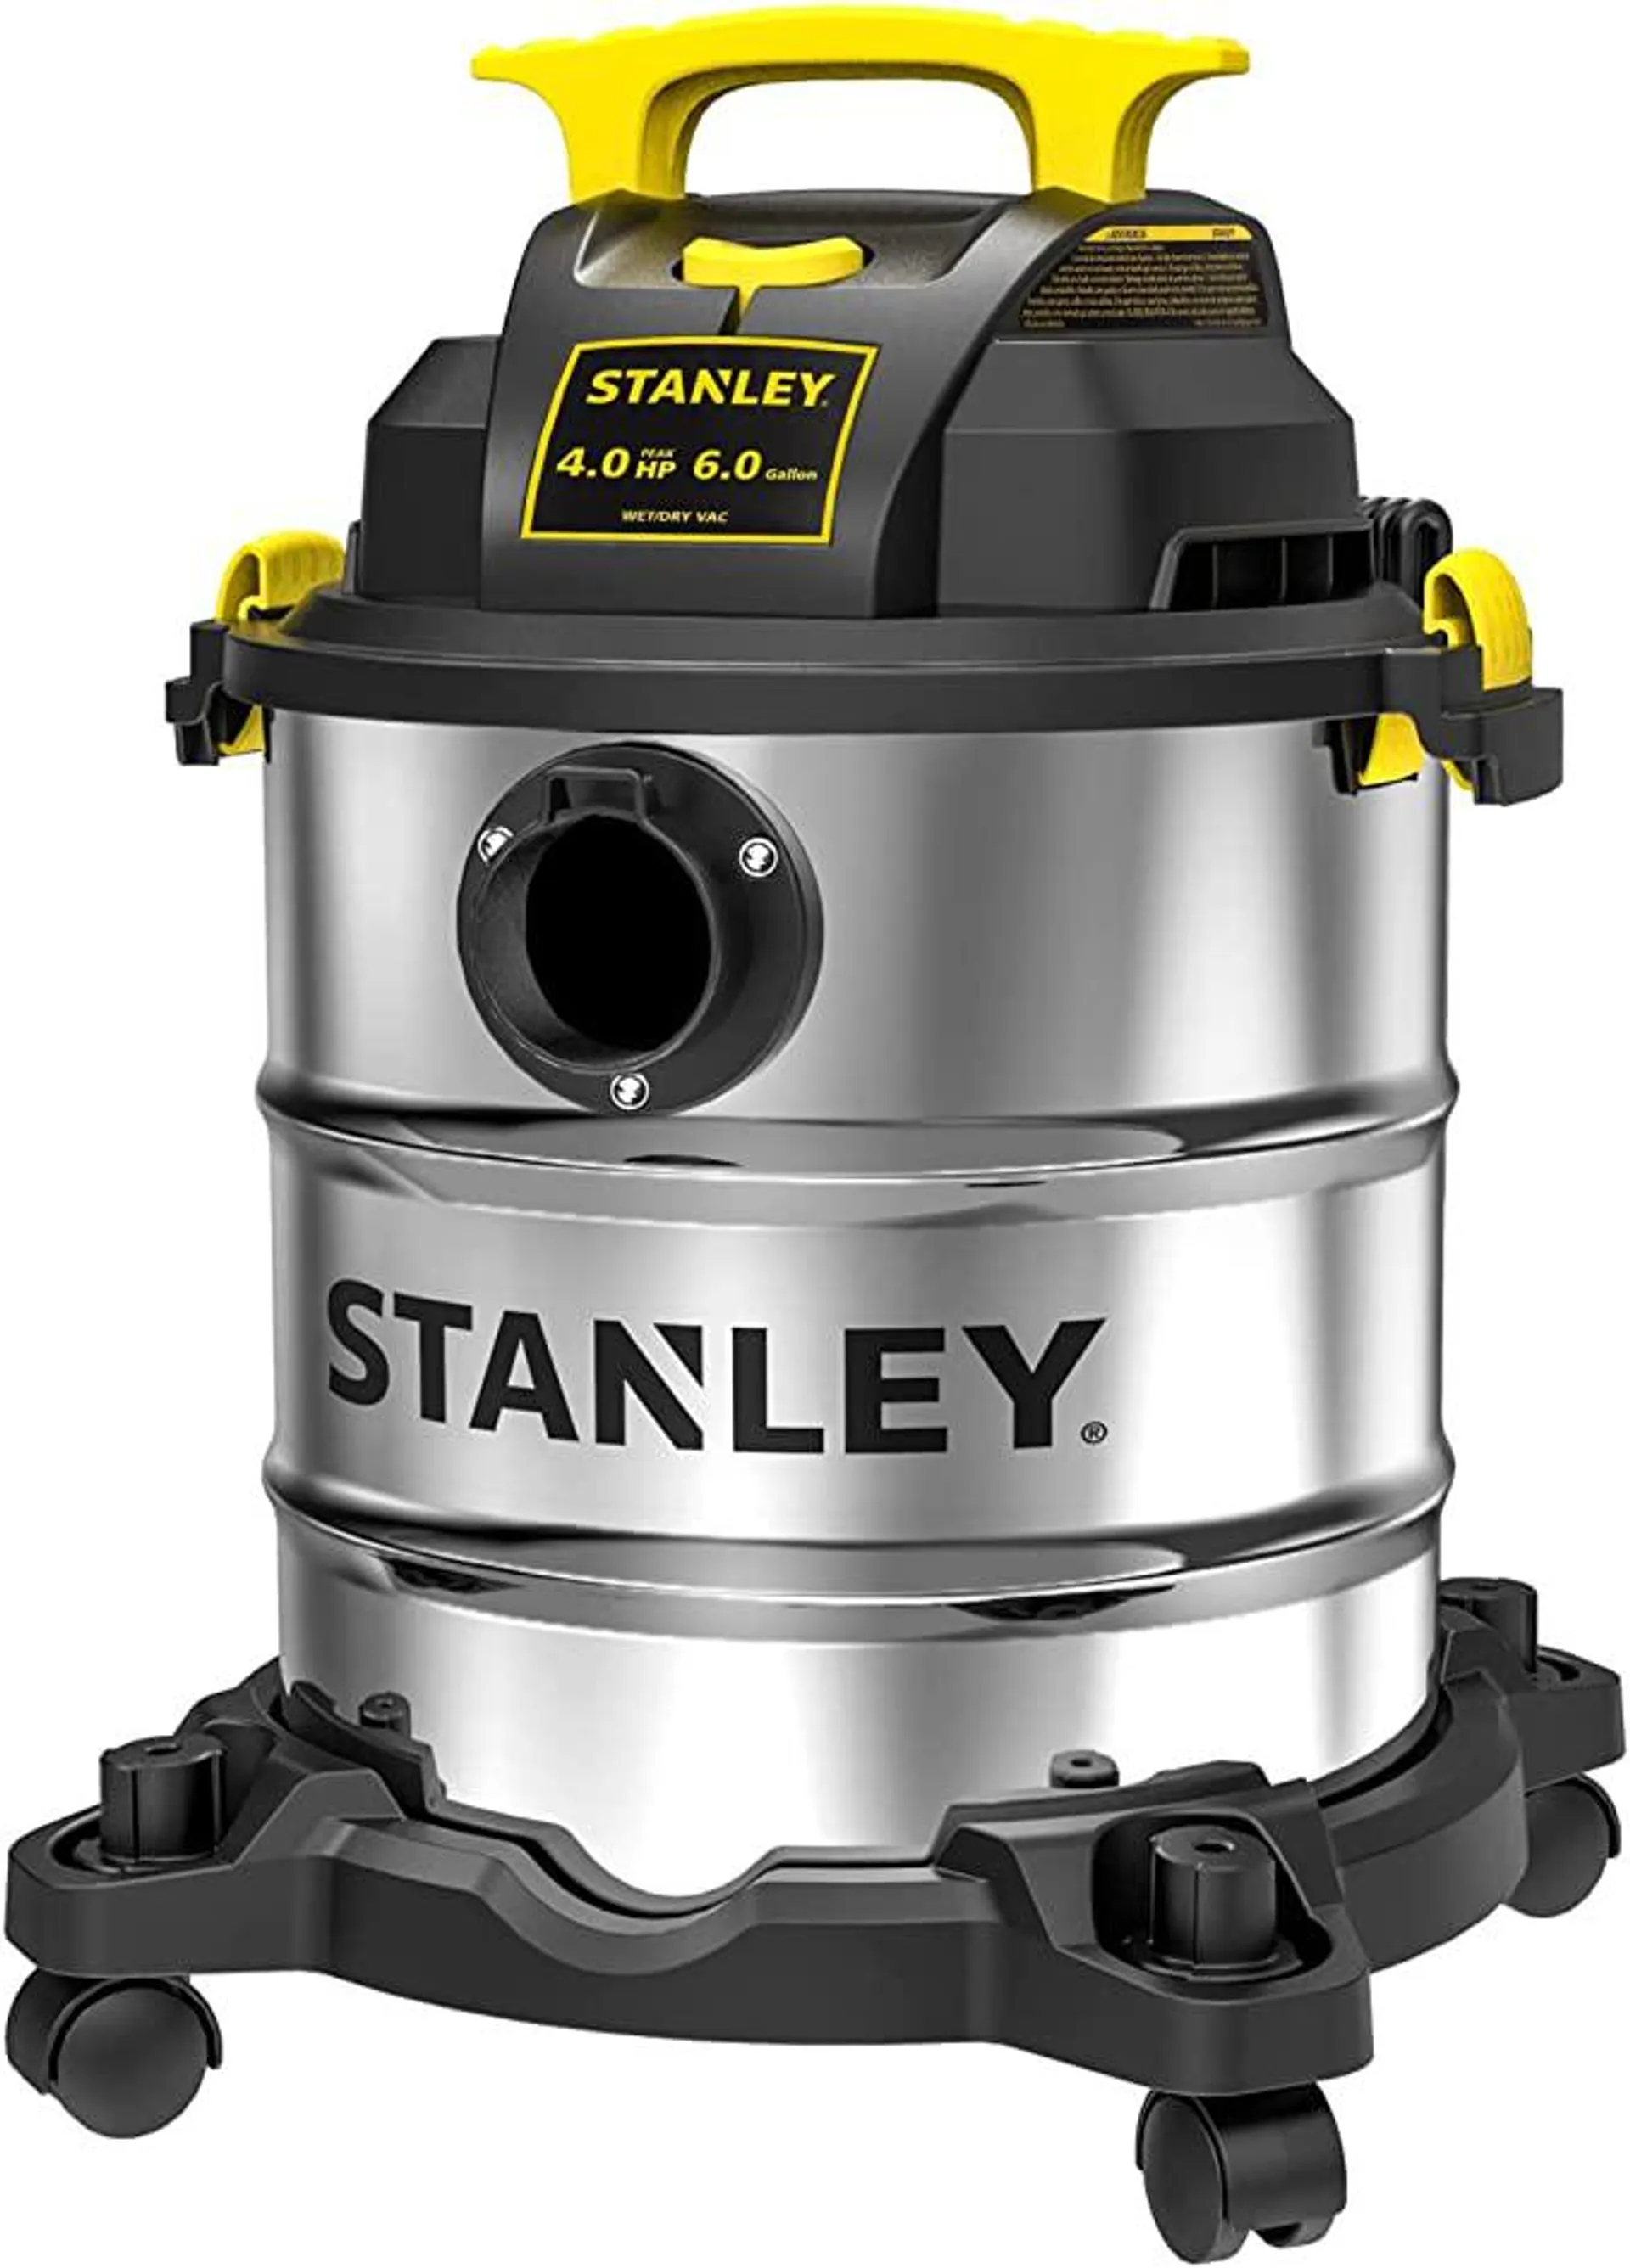 Stanley 6 Gallon Wet Dry Vacuum, 4 Peak HP Stainless Steel 3 in 1 Shop Vacuum with Blower, Multifunctional Vacuum Cleaner for Home, Jobsite, Garage, Basement, Model: SL18116